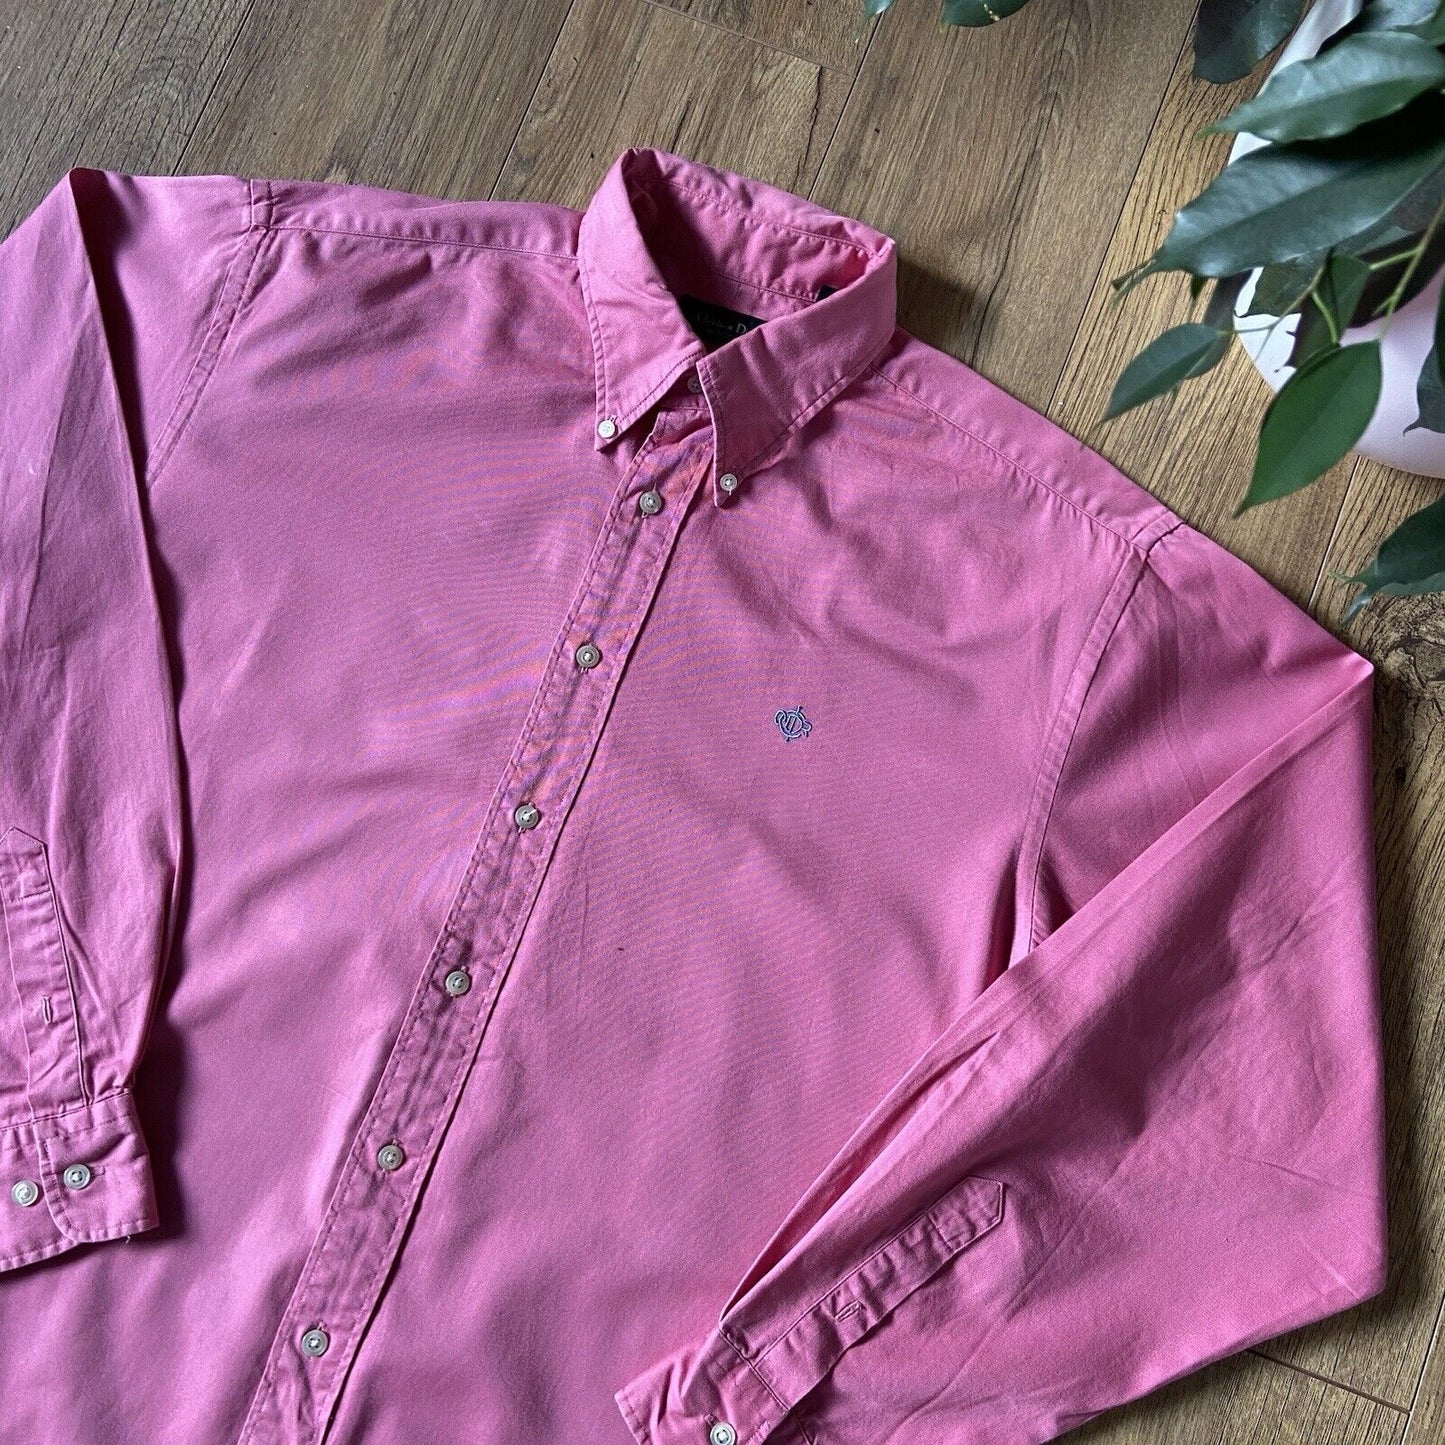 Vintage Christian Dior Oxford Shirt 90s Size L Pink Cotton Mens